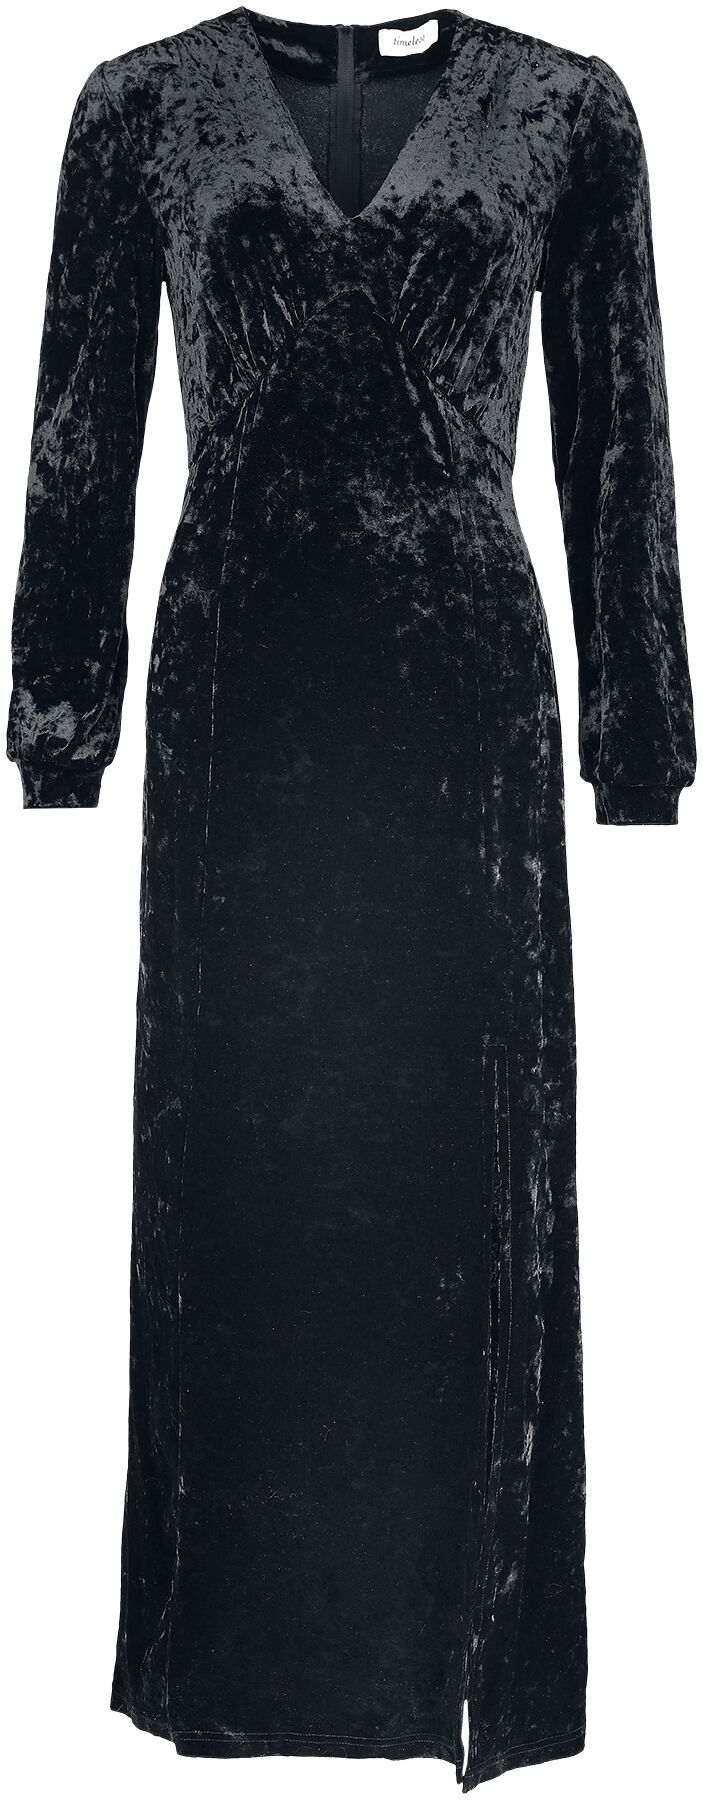 Timeless London Miley Black Dress Langes Kleid schwarz in XS